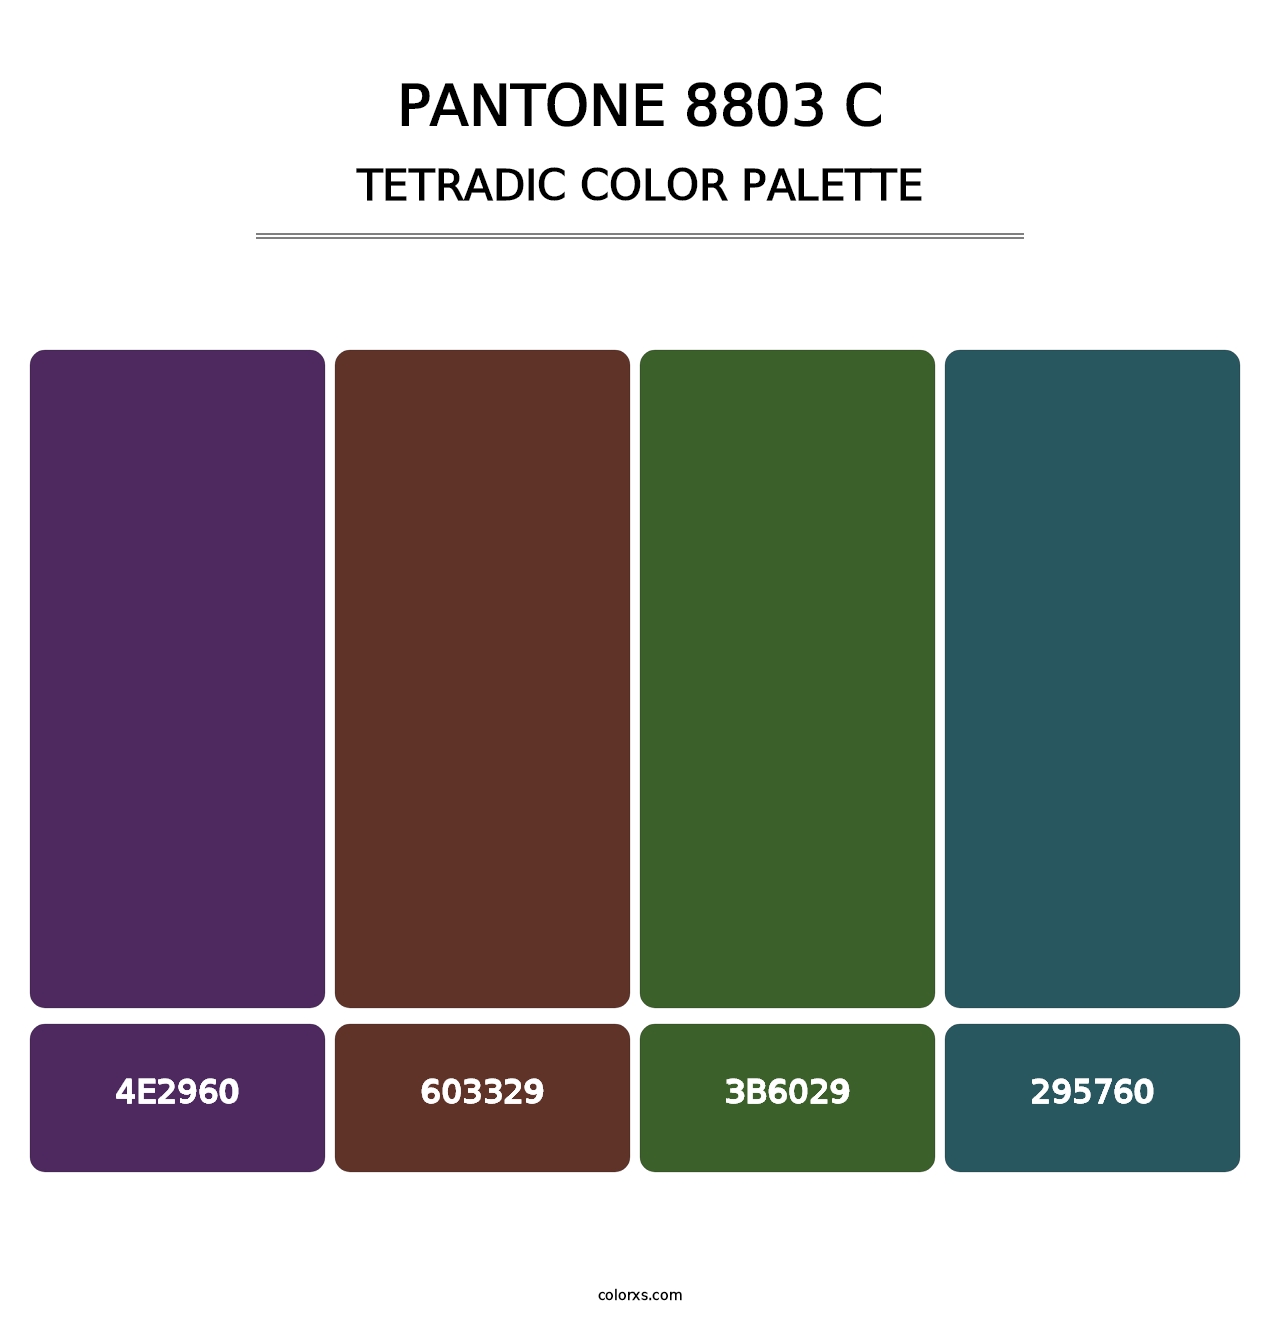 PANTONE 8803 C - Tetradic Color Palette